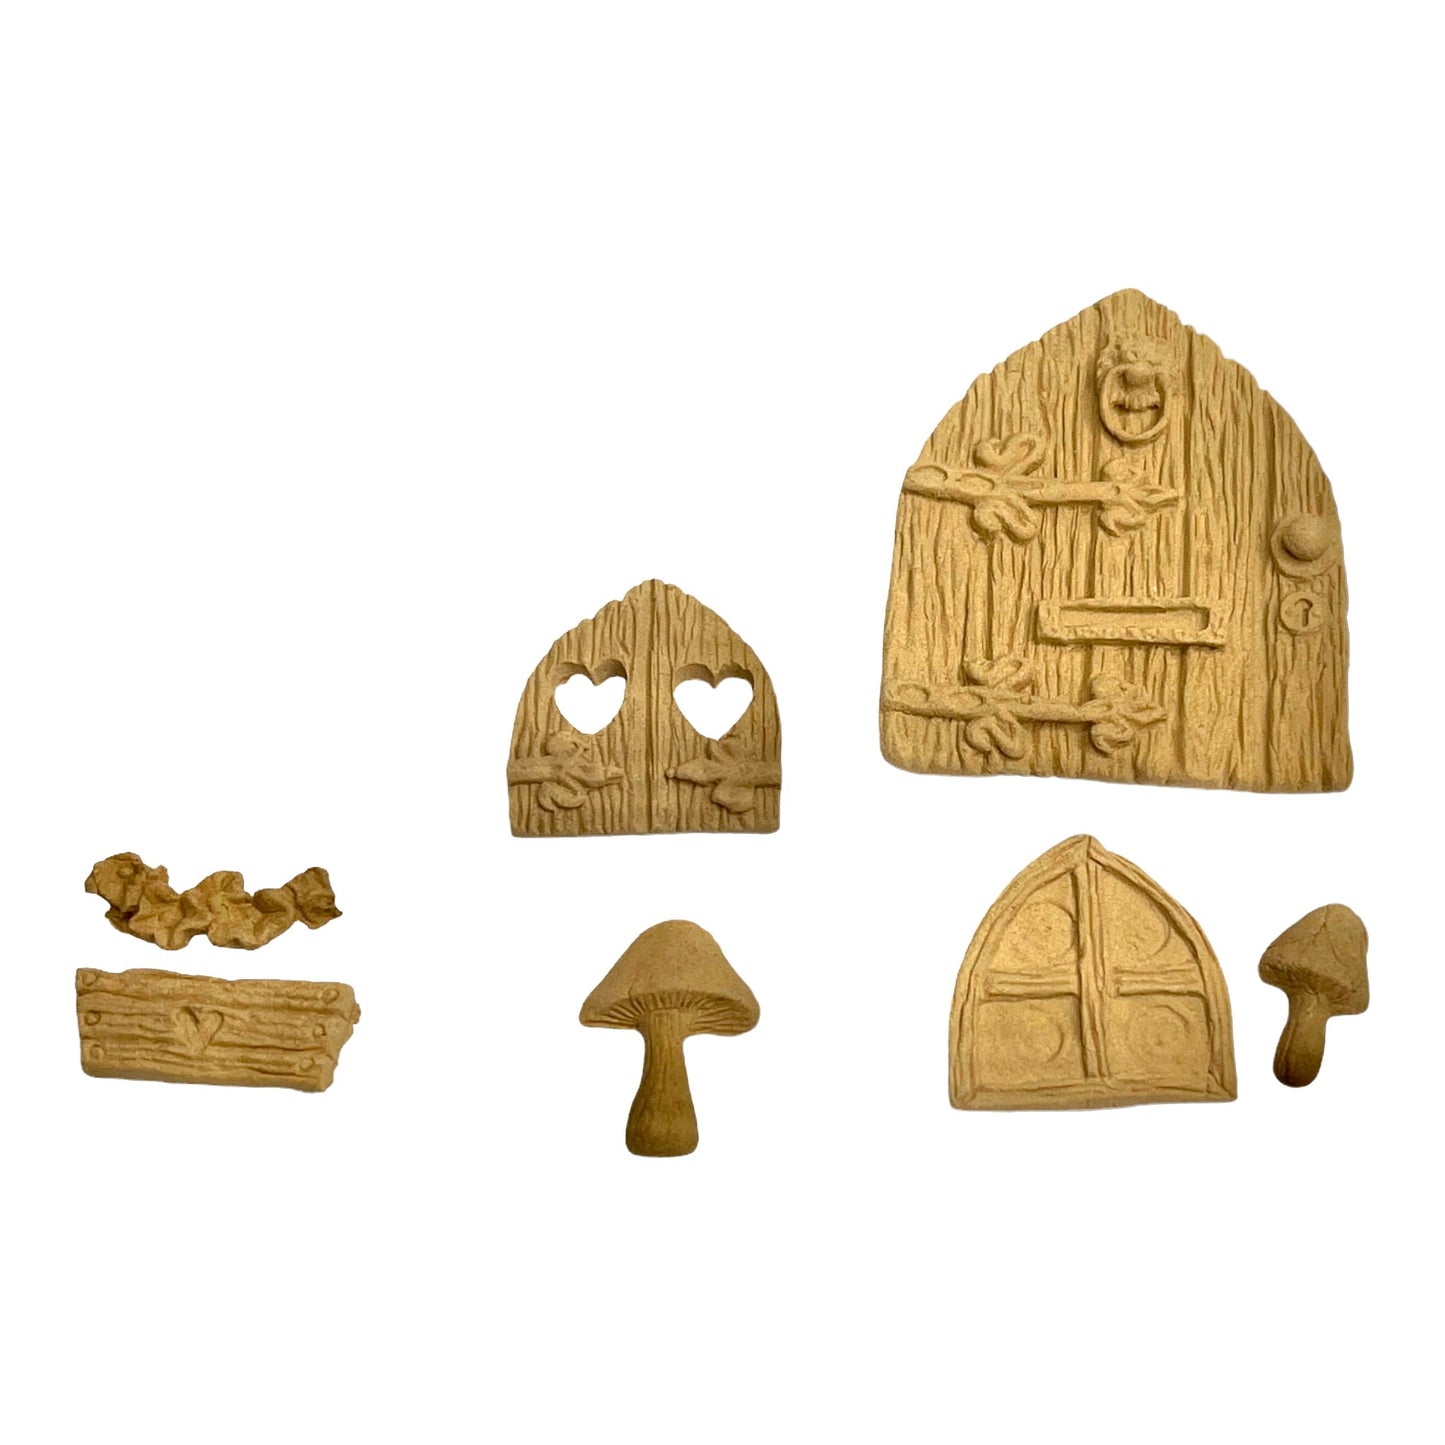 IFW 0069 Medieval fairy door, mushrooms, crafting embellishment, set of 7